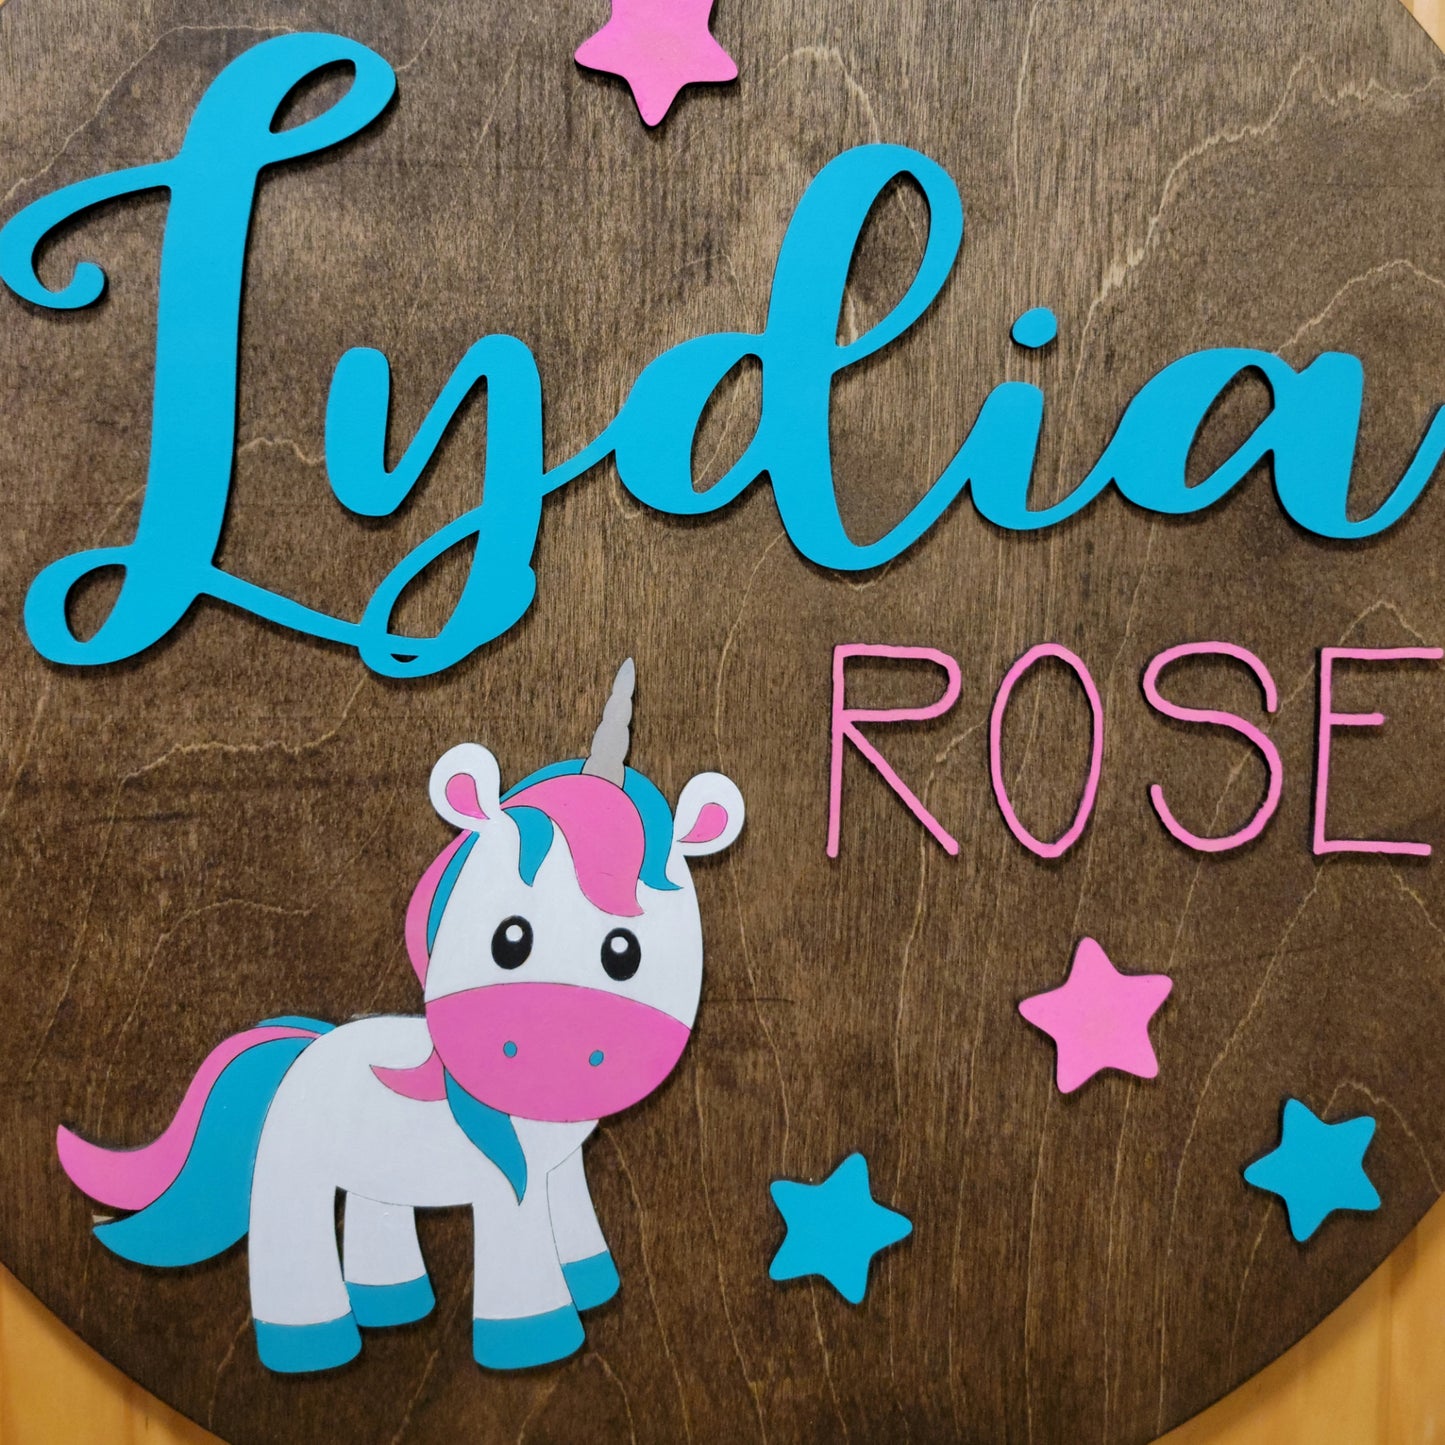 The "Lydia" Nursery Round